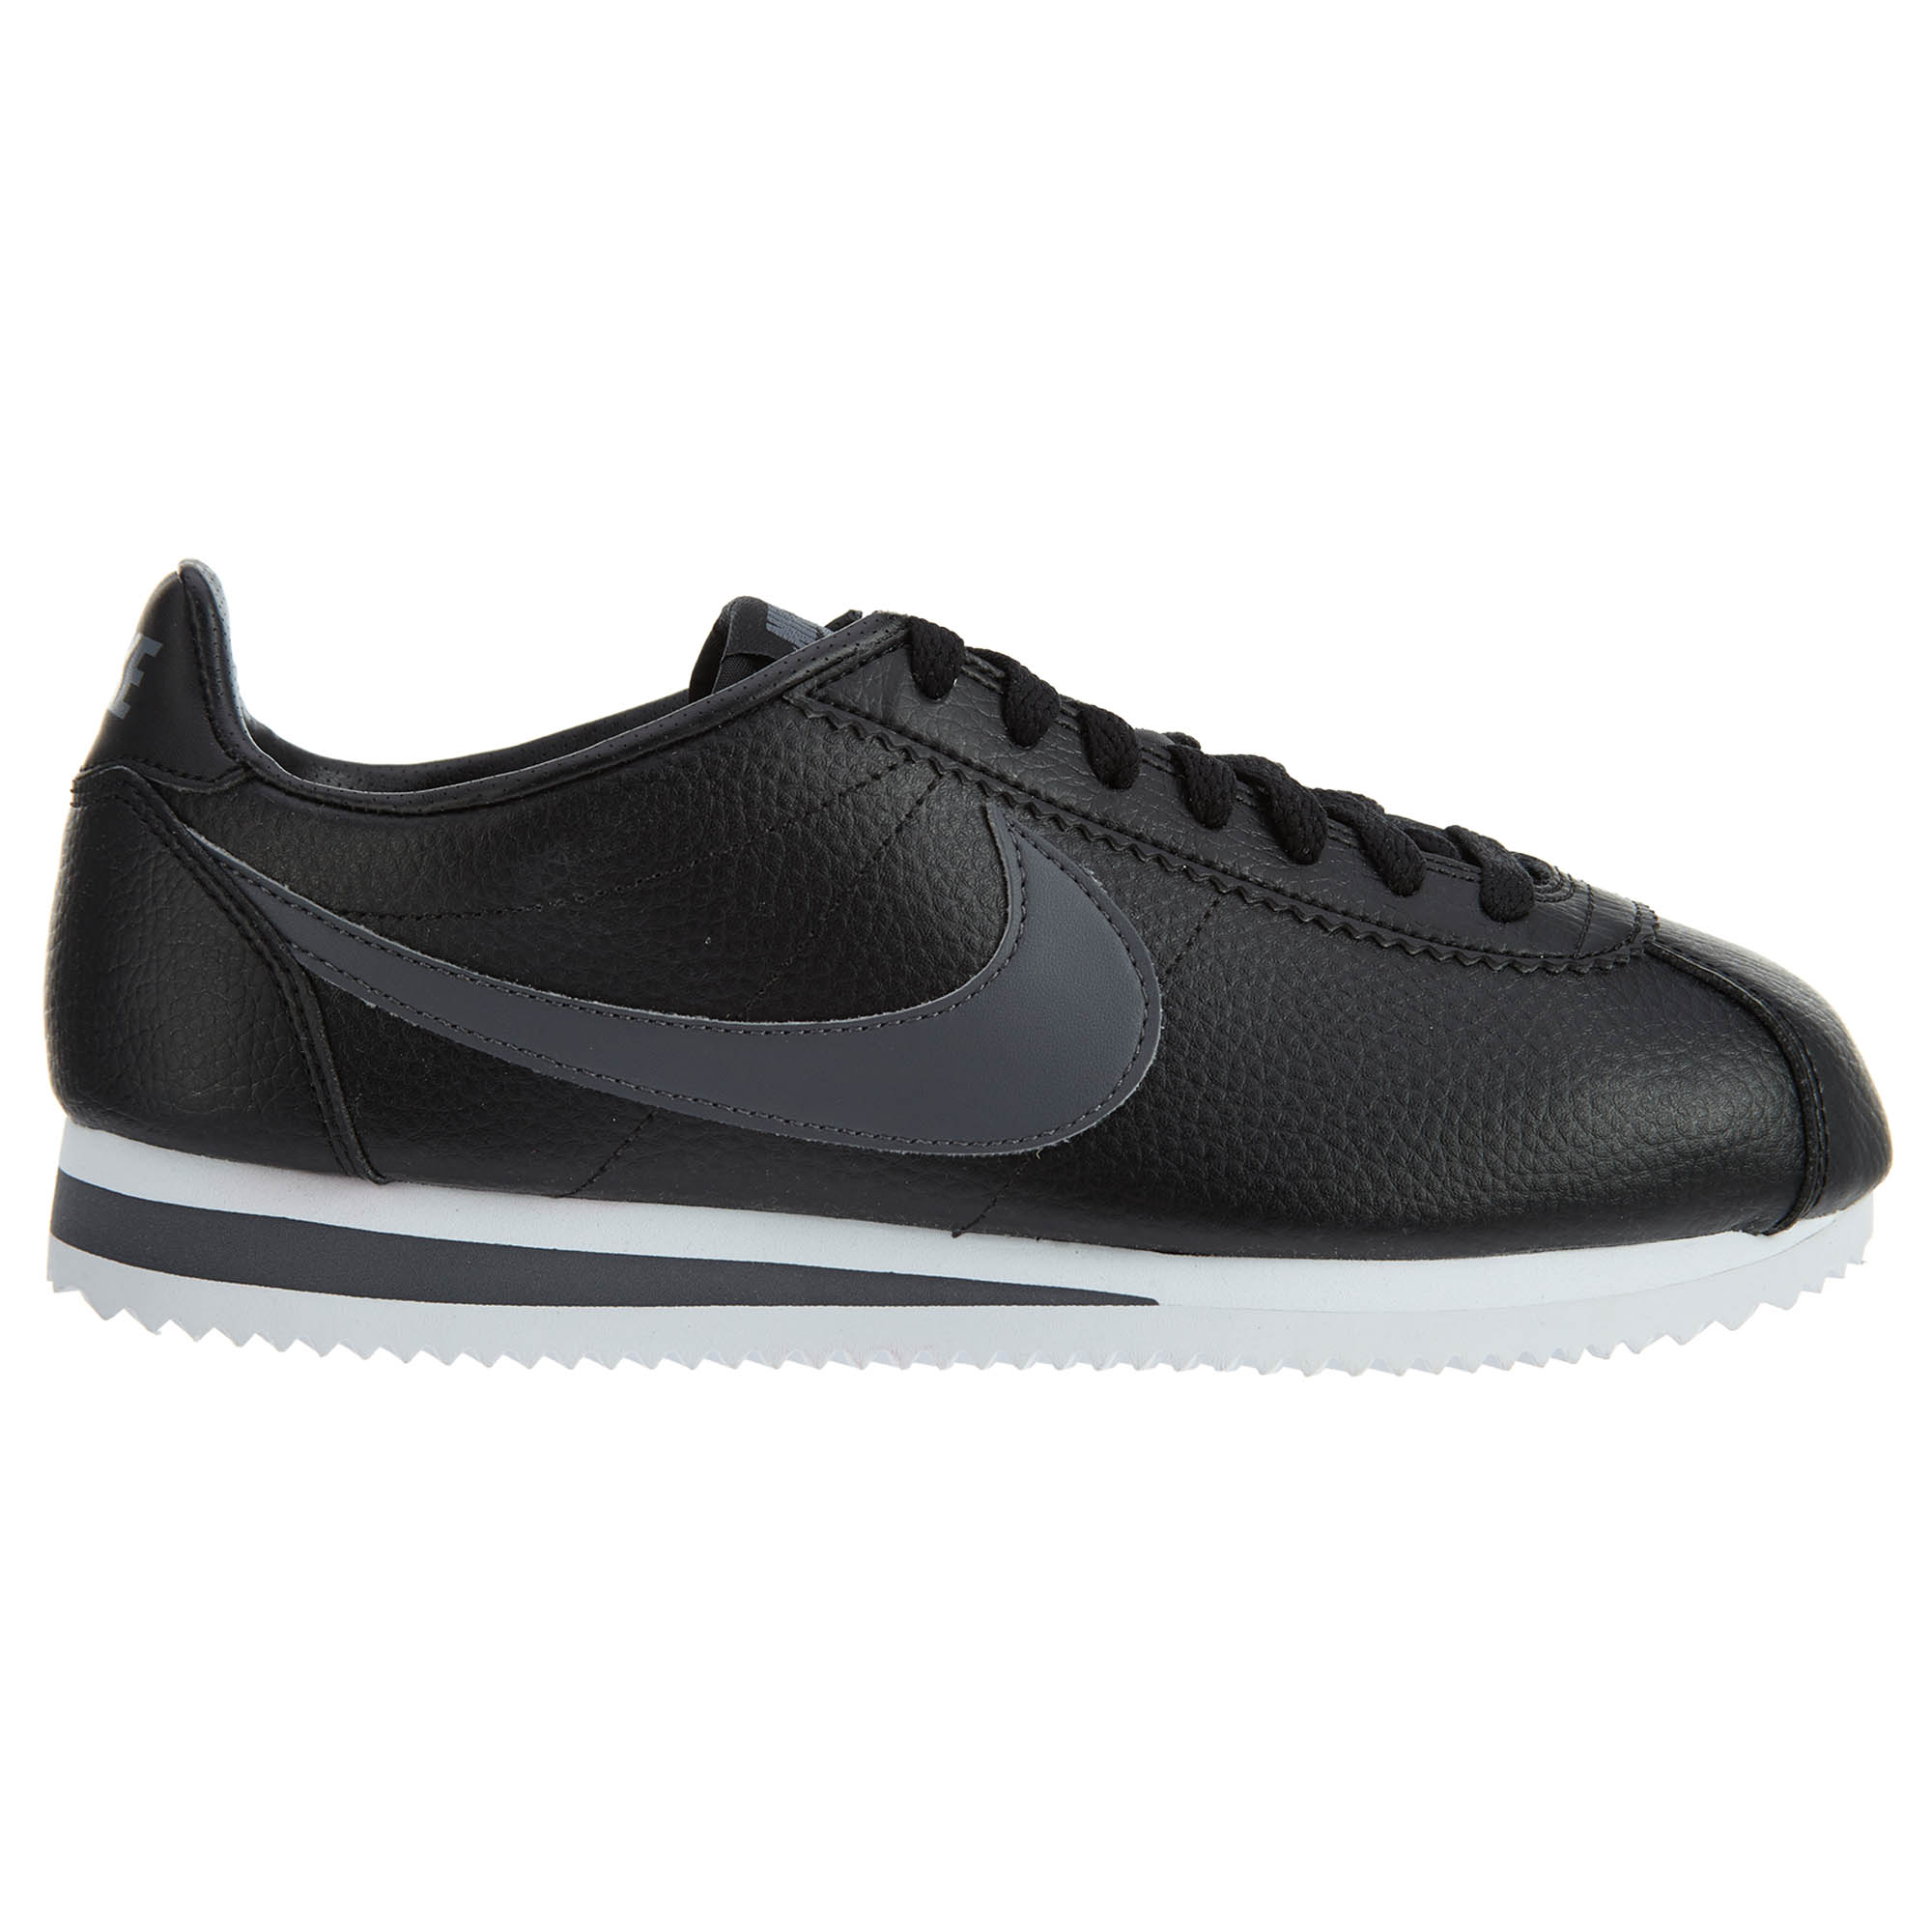 Nike Classic Cortez Leather Black/Dark Grey-White - 749571-011